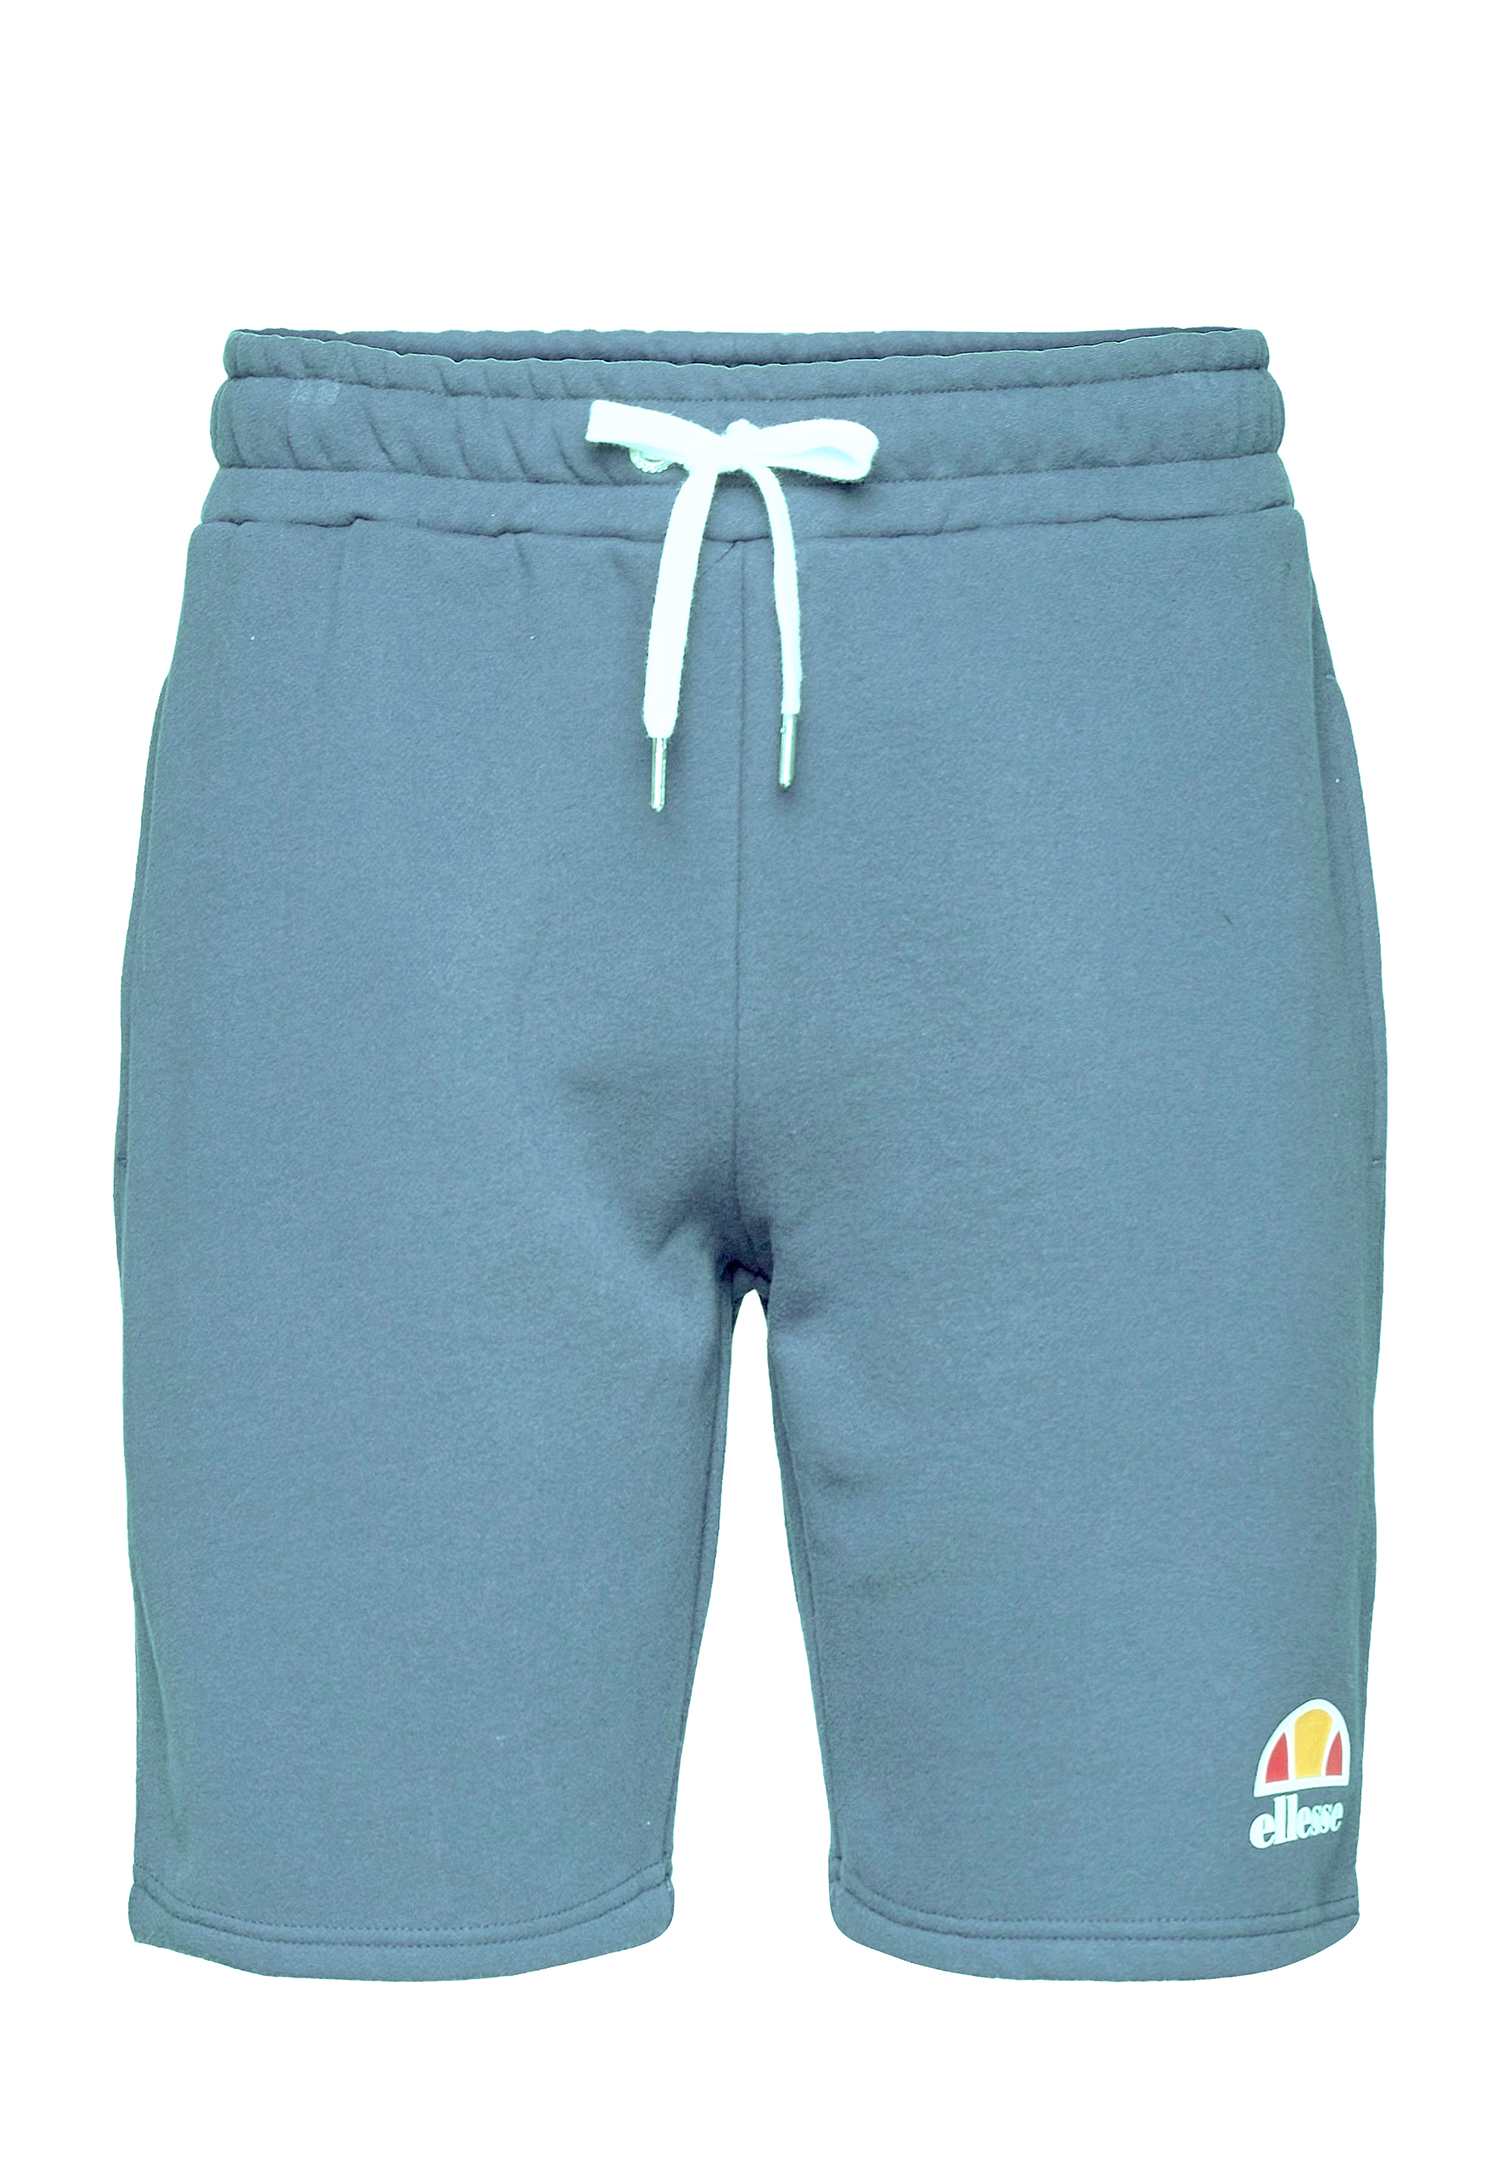 Ellesse Malviva 7inch Short Pants Herren Sweatpants kurz Jogginghose SXN13532 blau